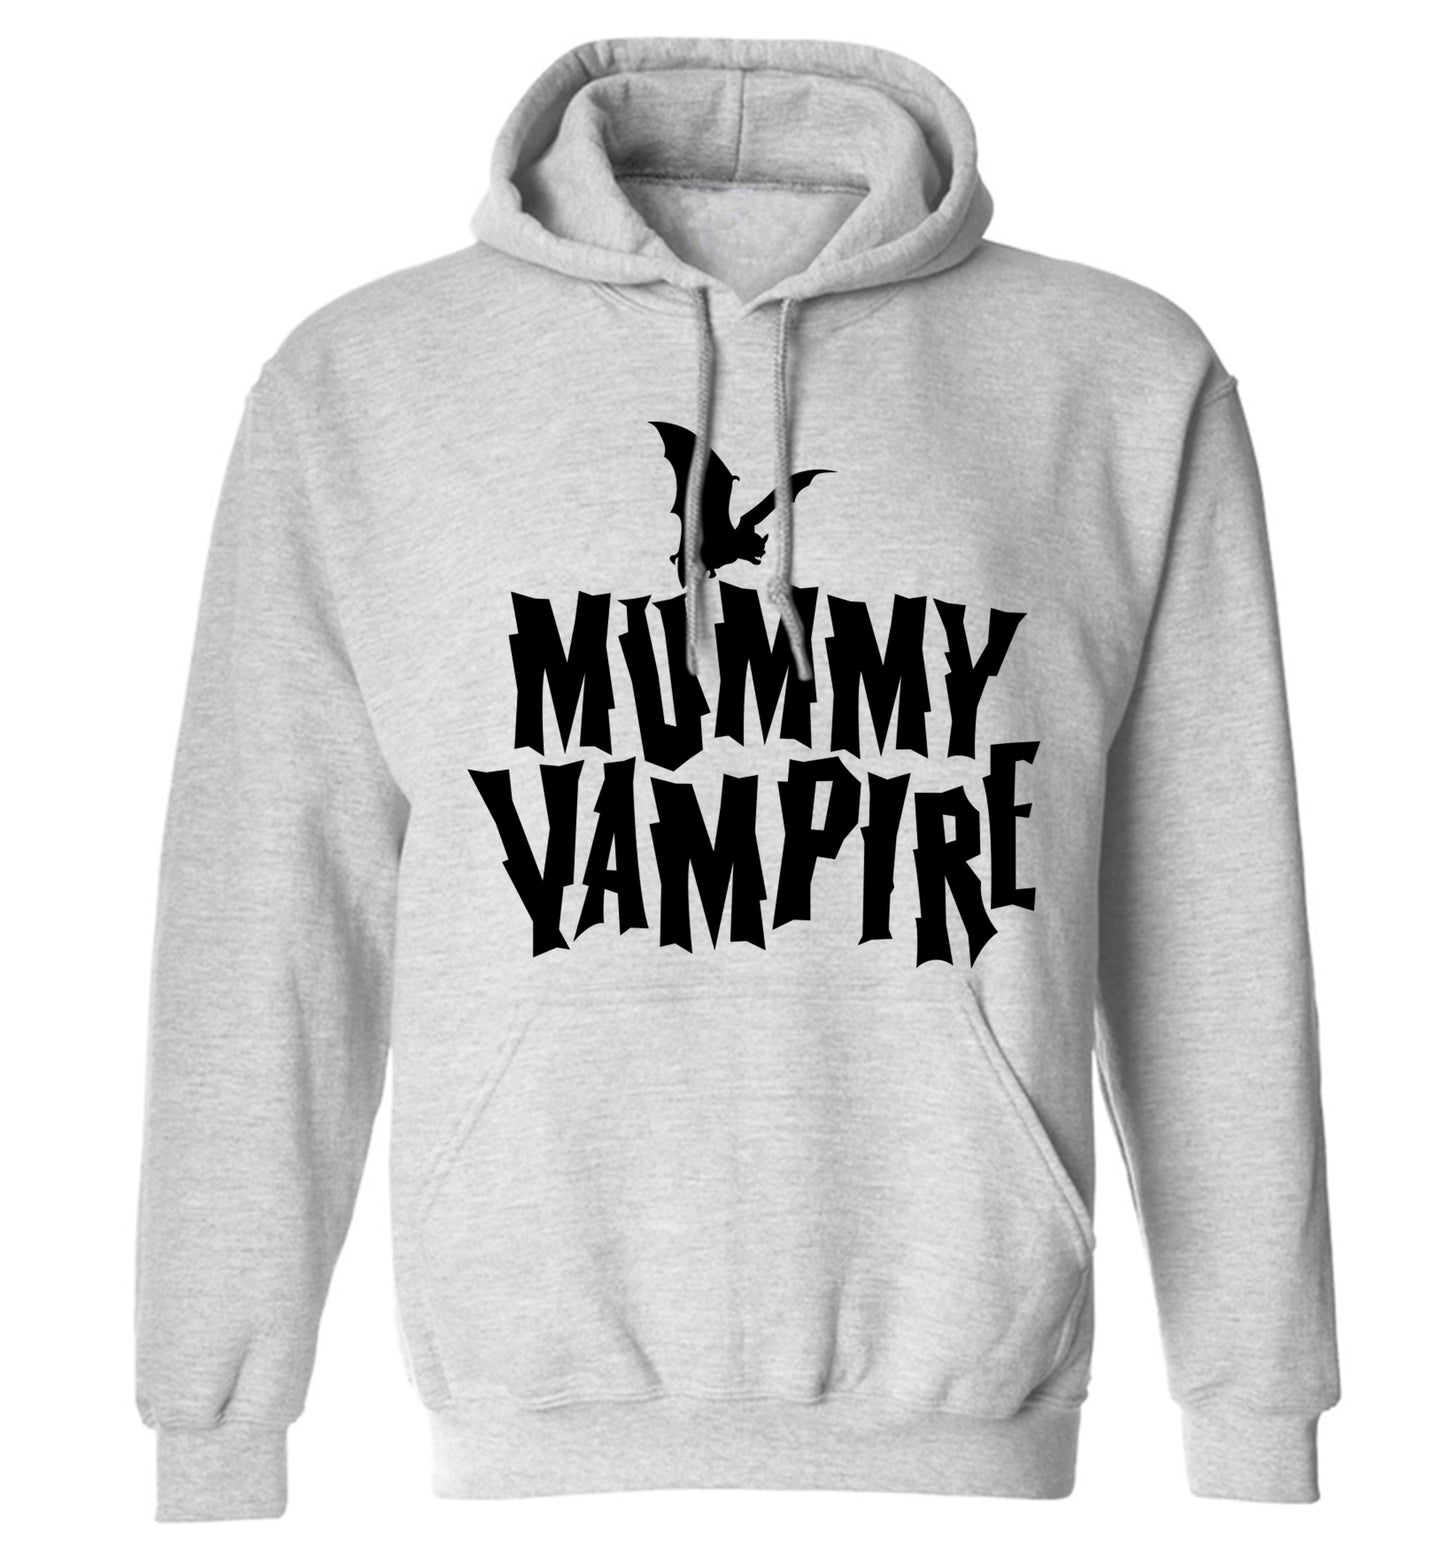 Mummy vampire adults unisex grey hoodie 2XL